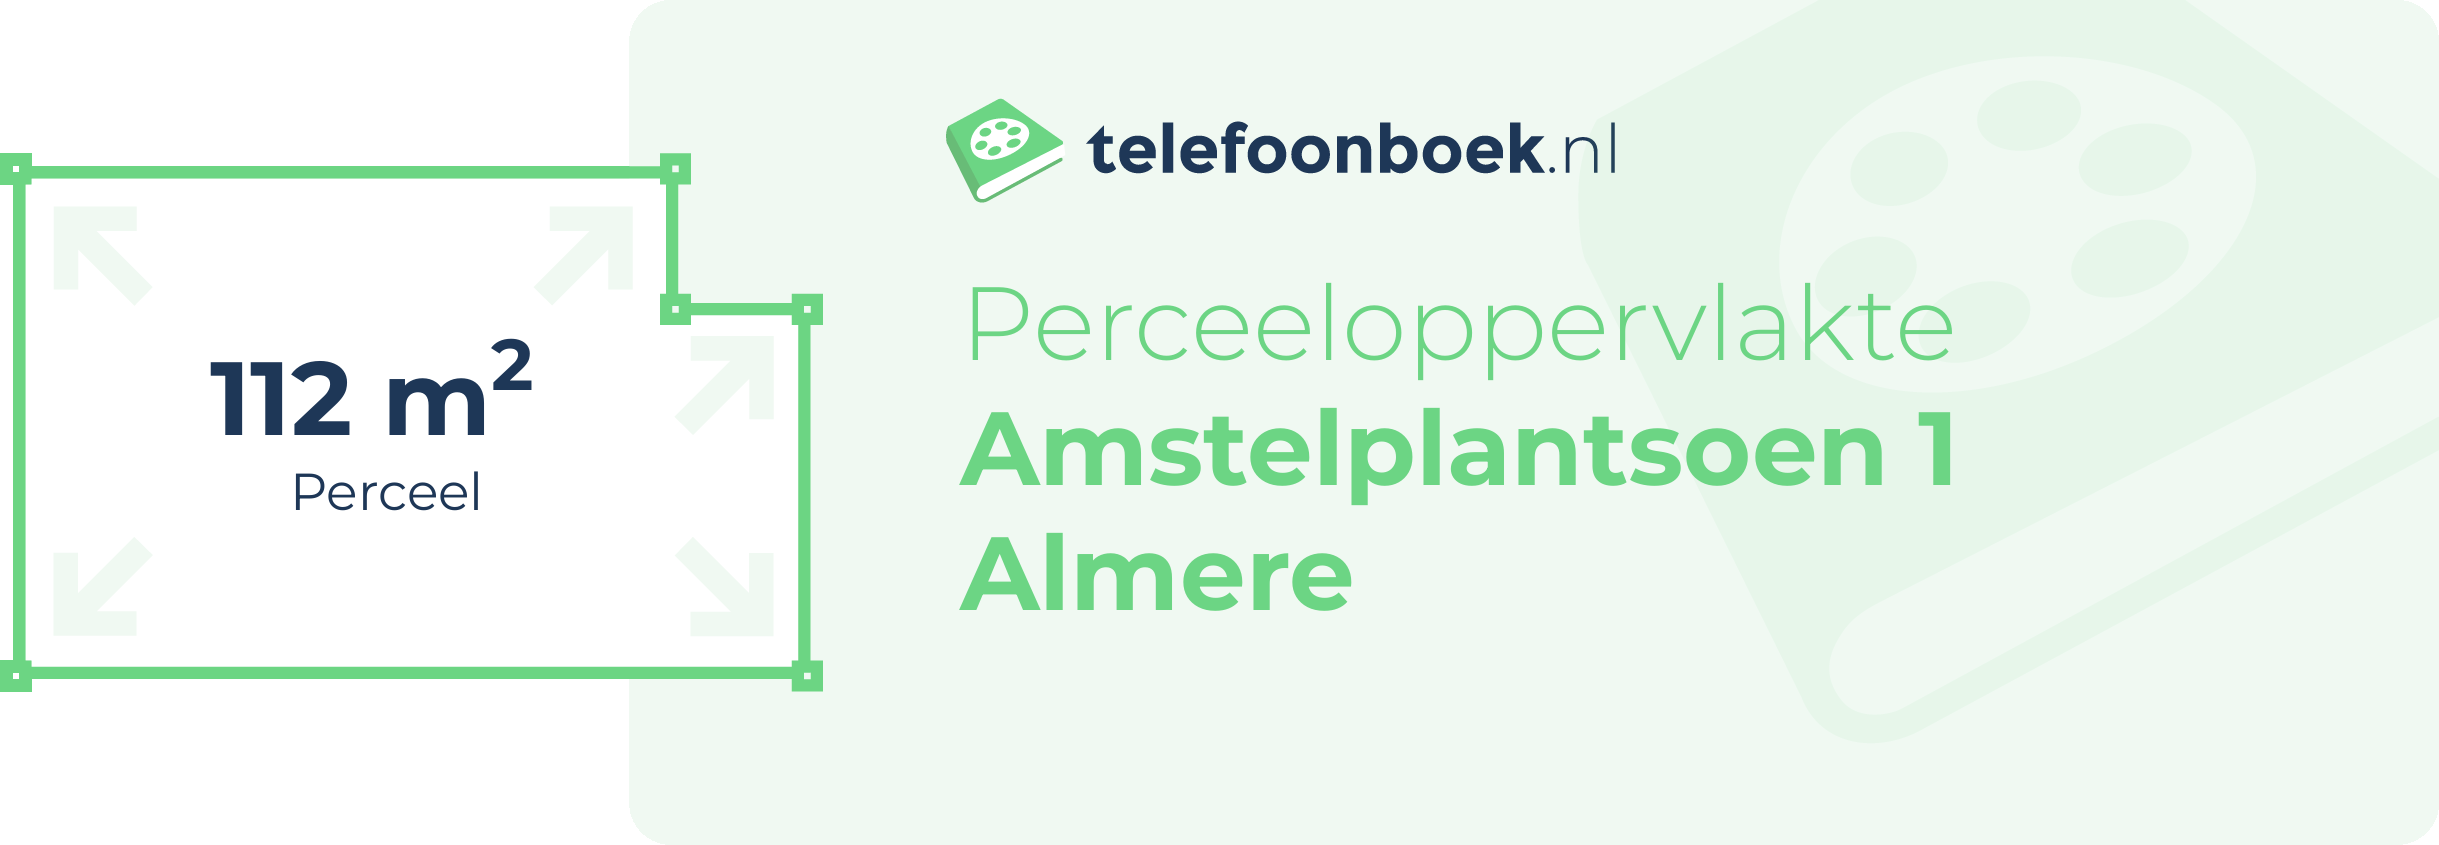 Perceeloppervlakte Amstelplantsoen 1 Almere